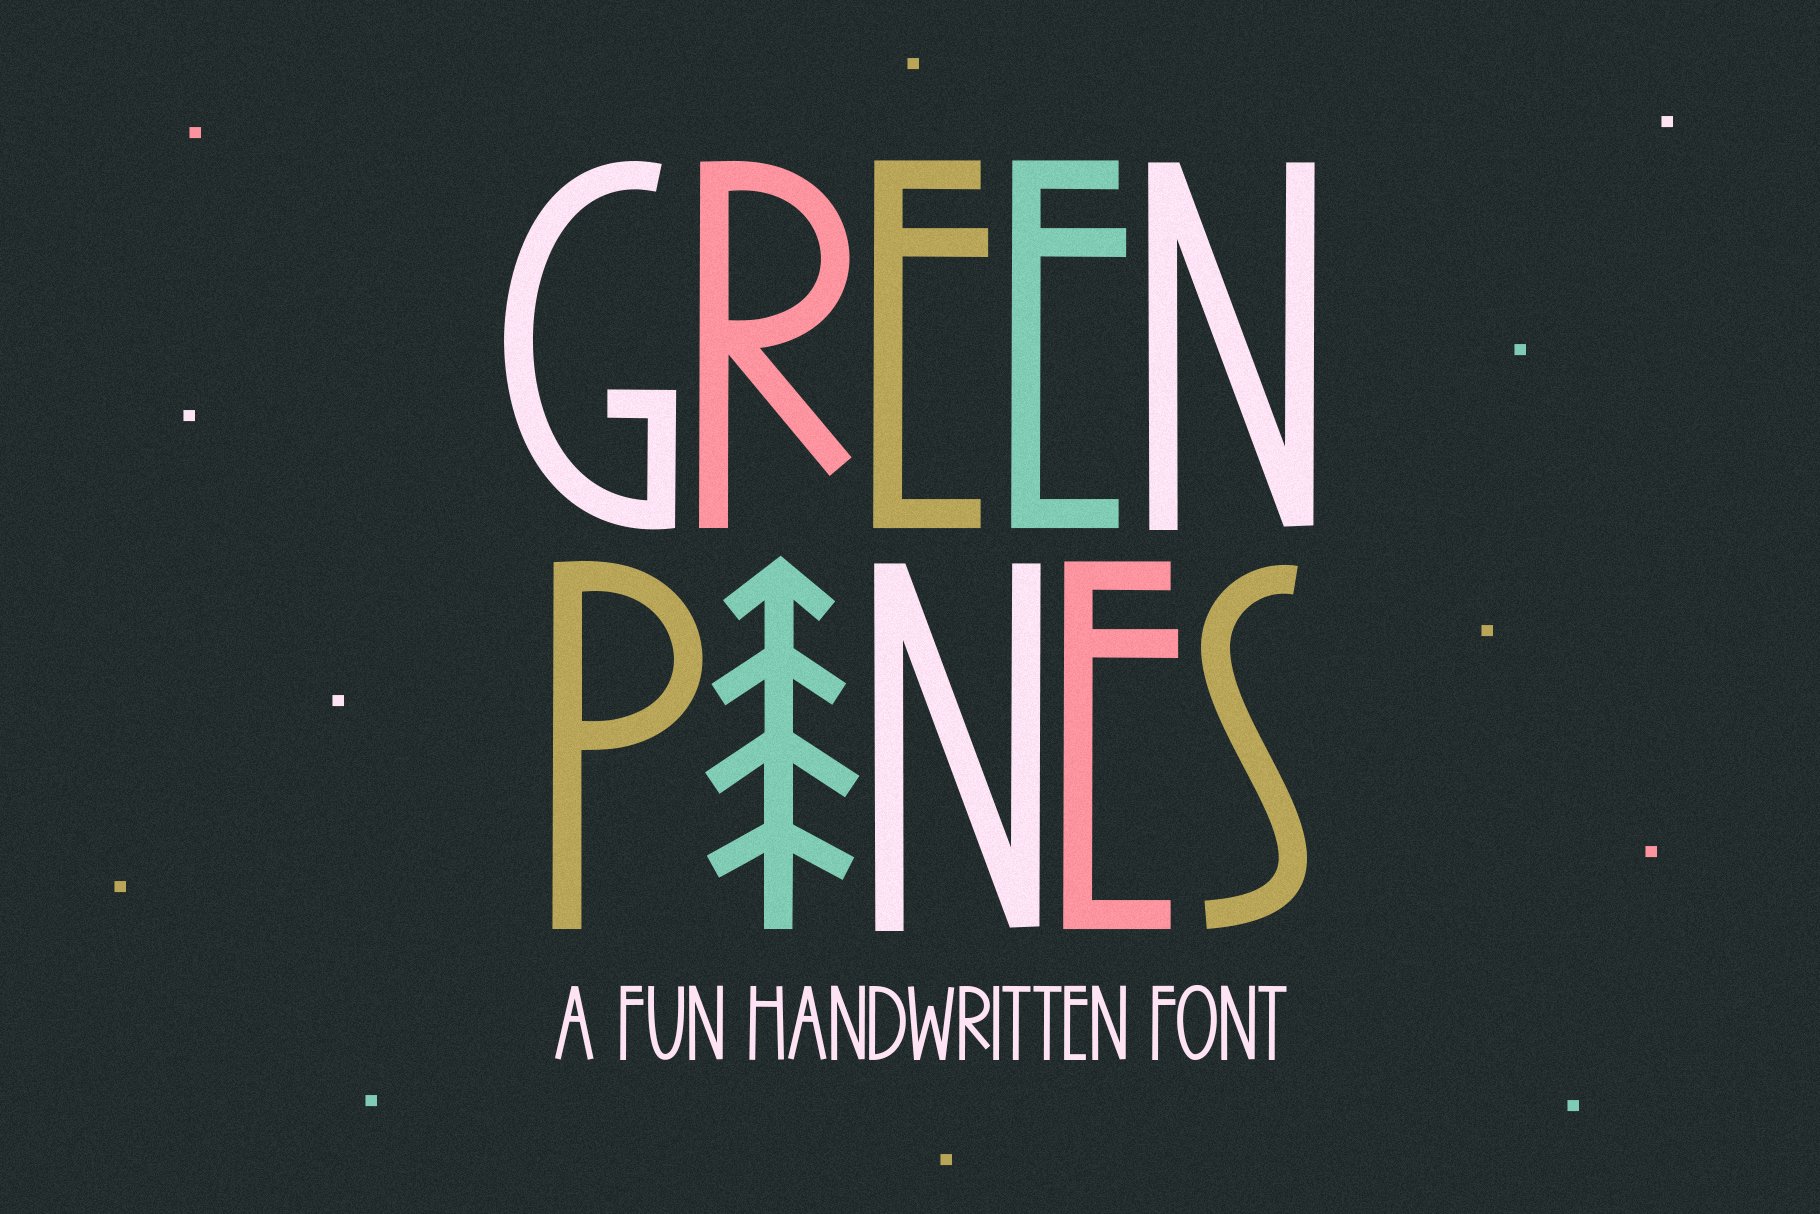 Green Pines | Fun Handwritten Font cover image.